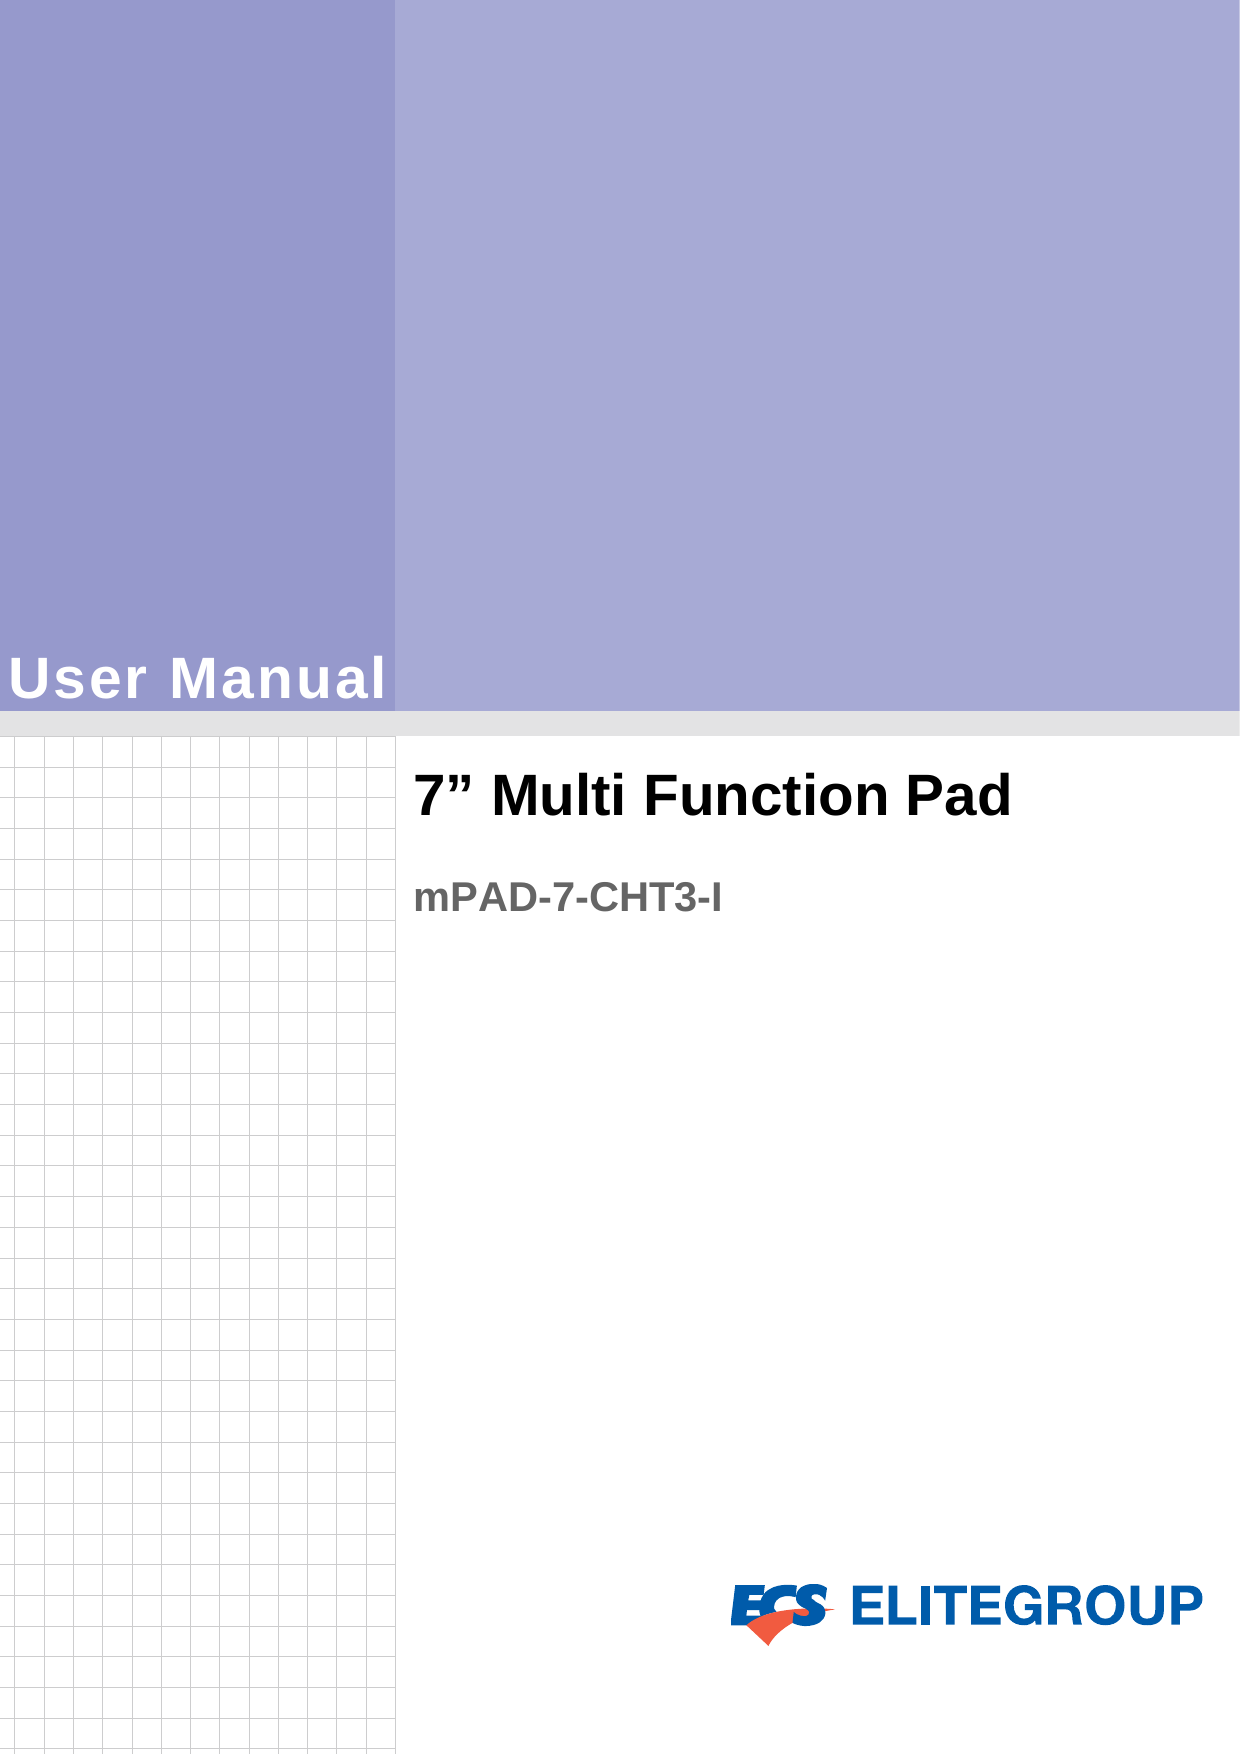 User Manual 7” Multi Function Pad mPAD-7-CHT3-I  